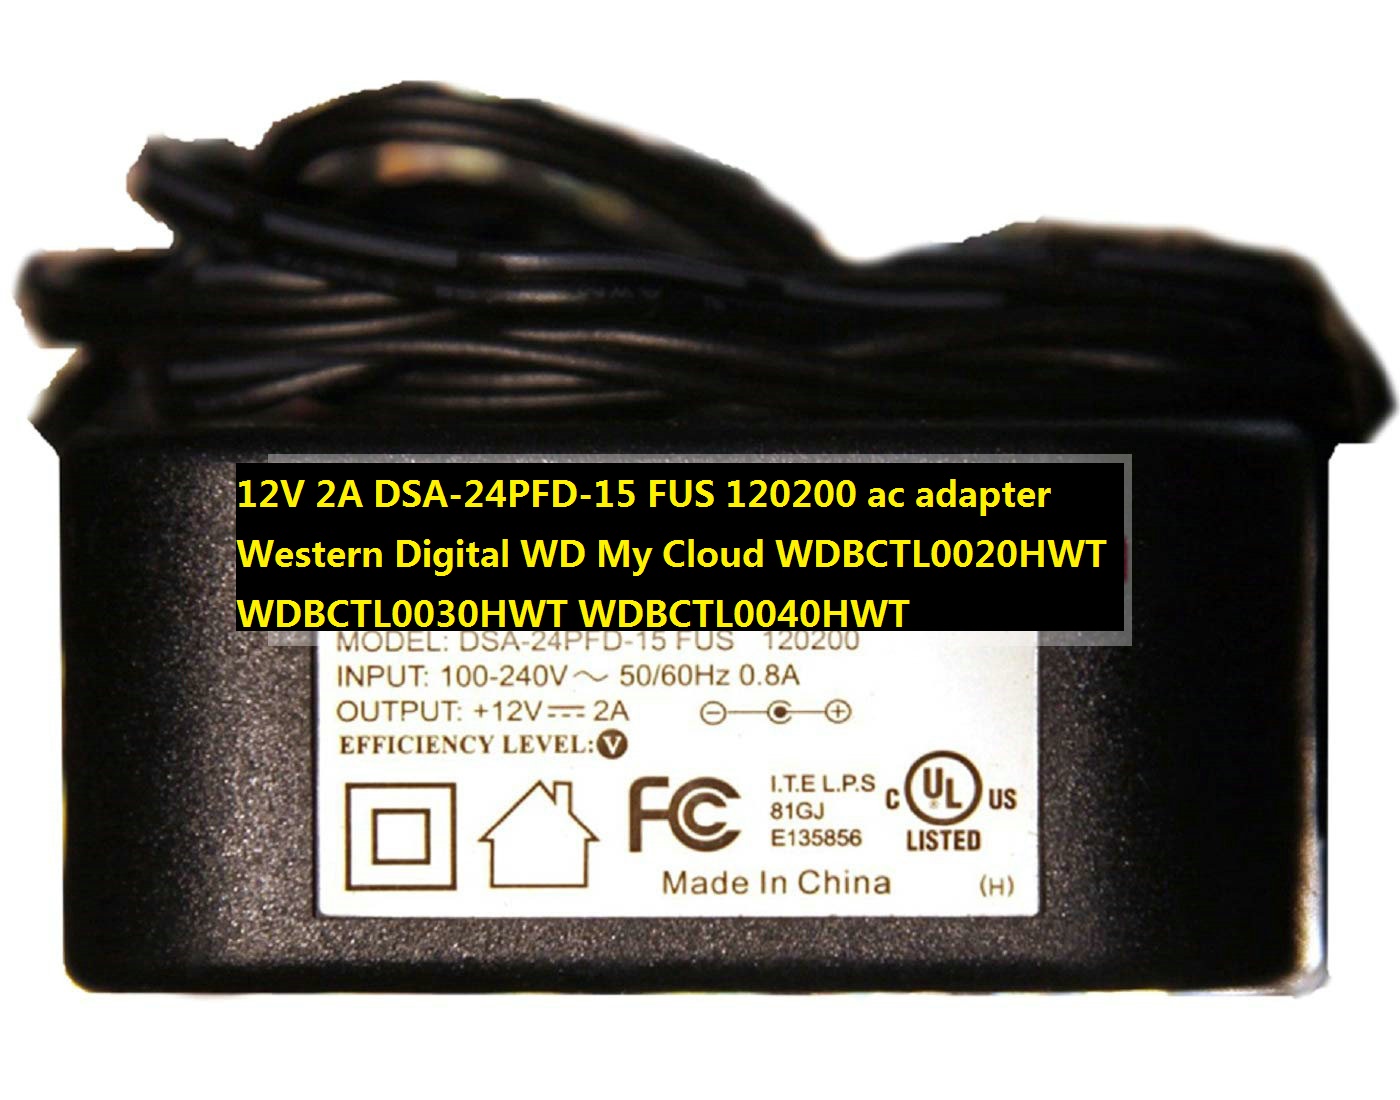 *Brand NEW* 12V 2A DSA-24PFD-15 FUS 120200 ac adapter Western Digital WD My Cloud WDBCTL0020HWT WDBCTL0030HWT - Click Image to Close